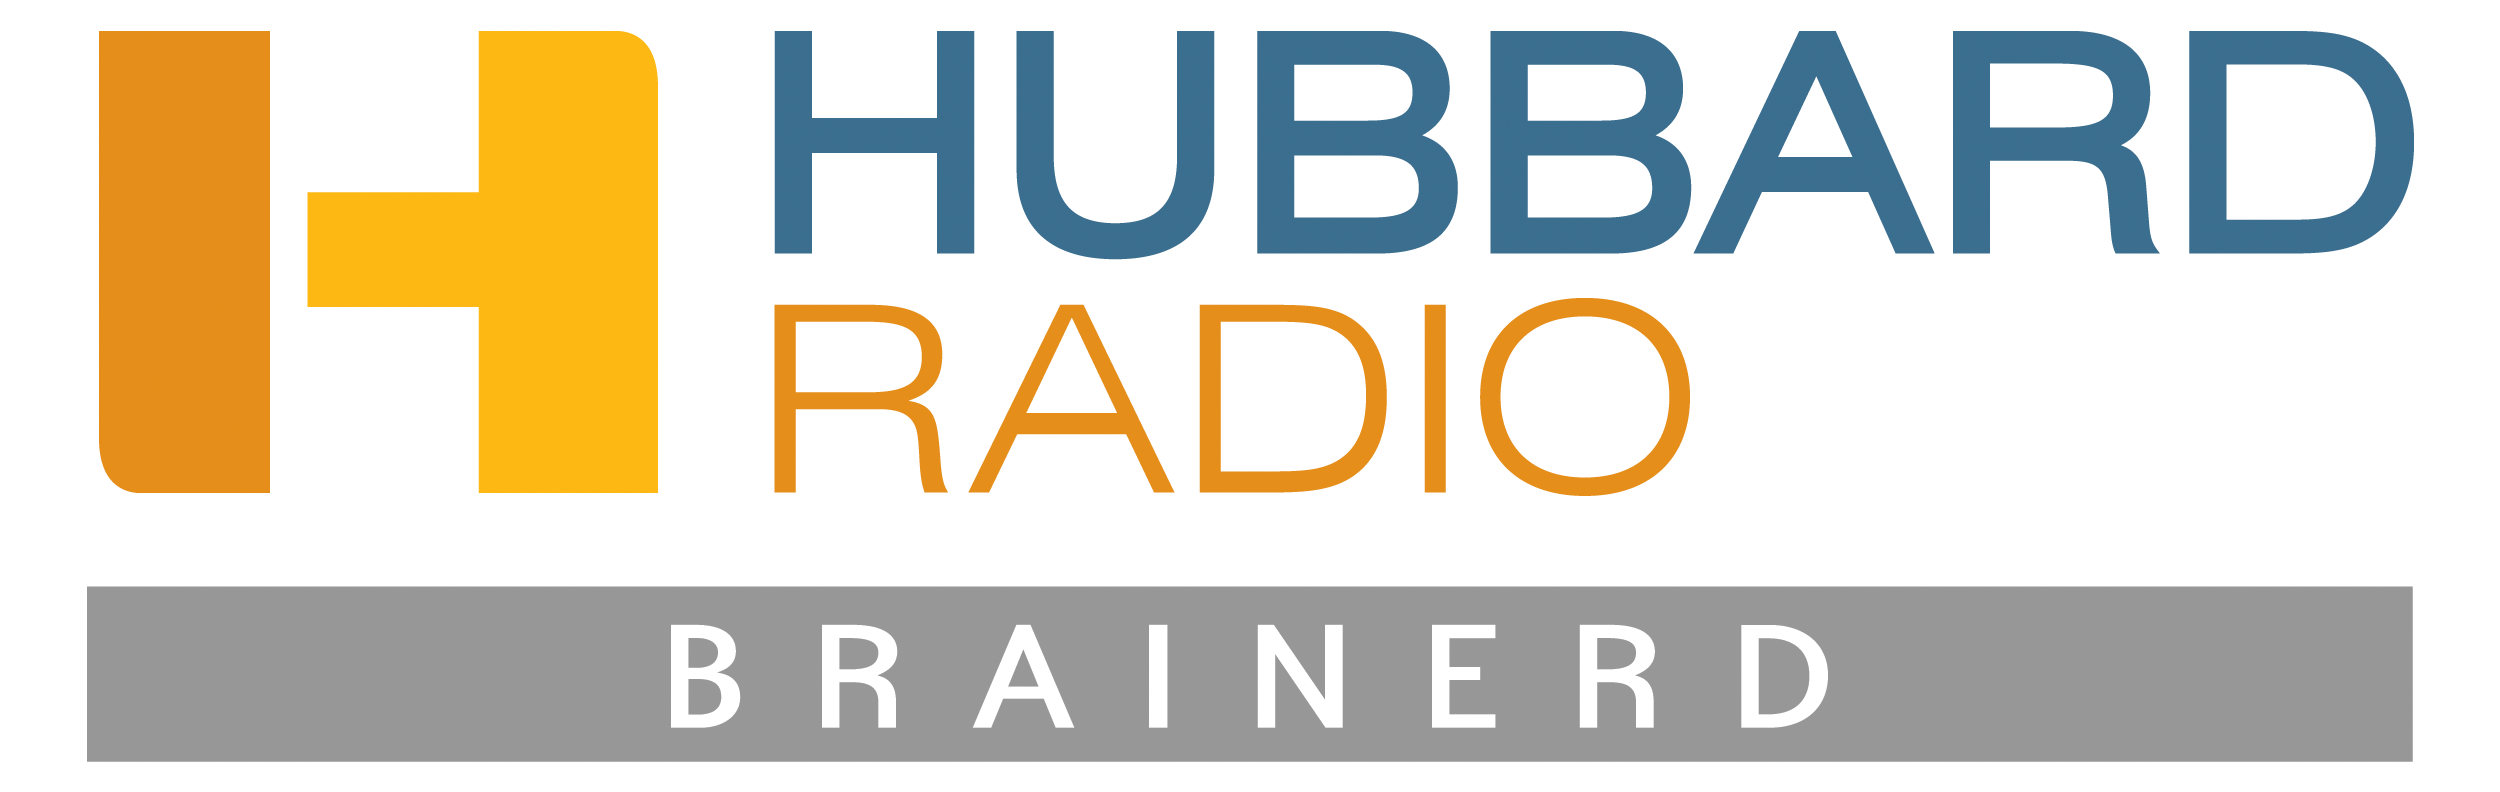 Hubbard Logo - hubbard brainerd logo better size - The Power Loon